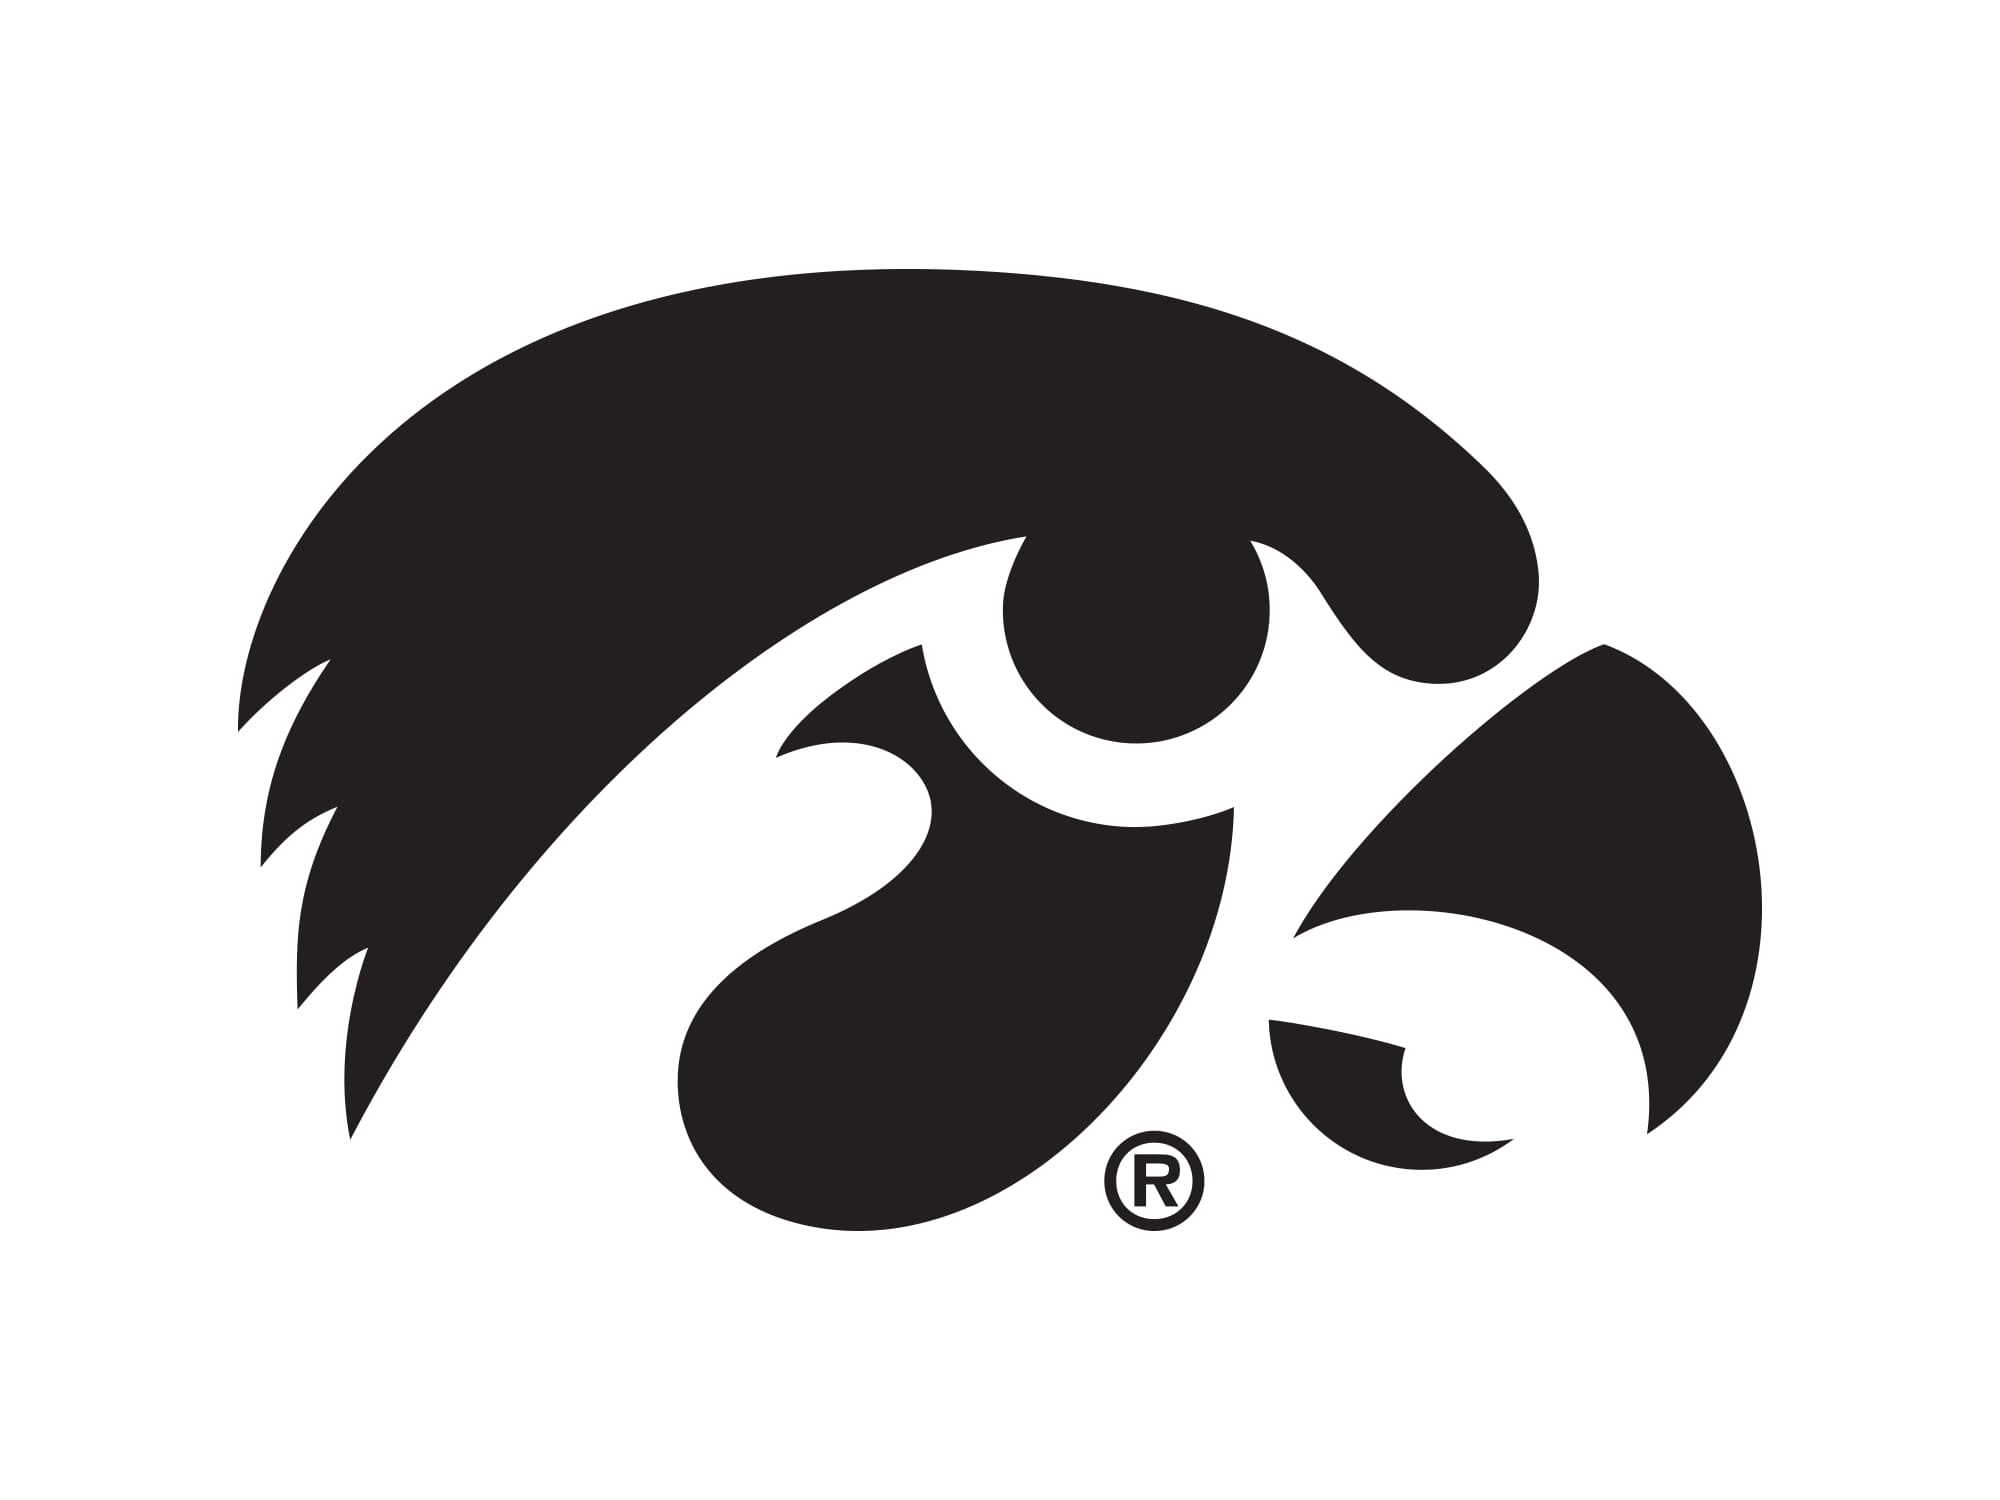 https://1000logos.net/wp-content/uploads/2017/08/Iowa-Hawkeyes-logo.jpg